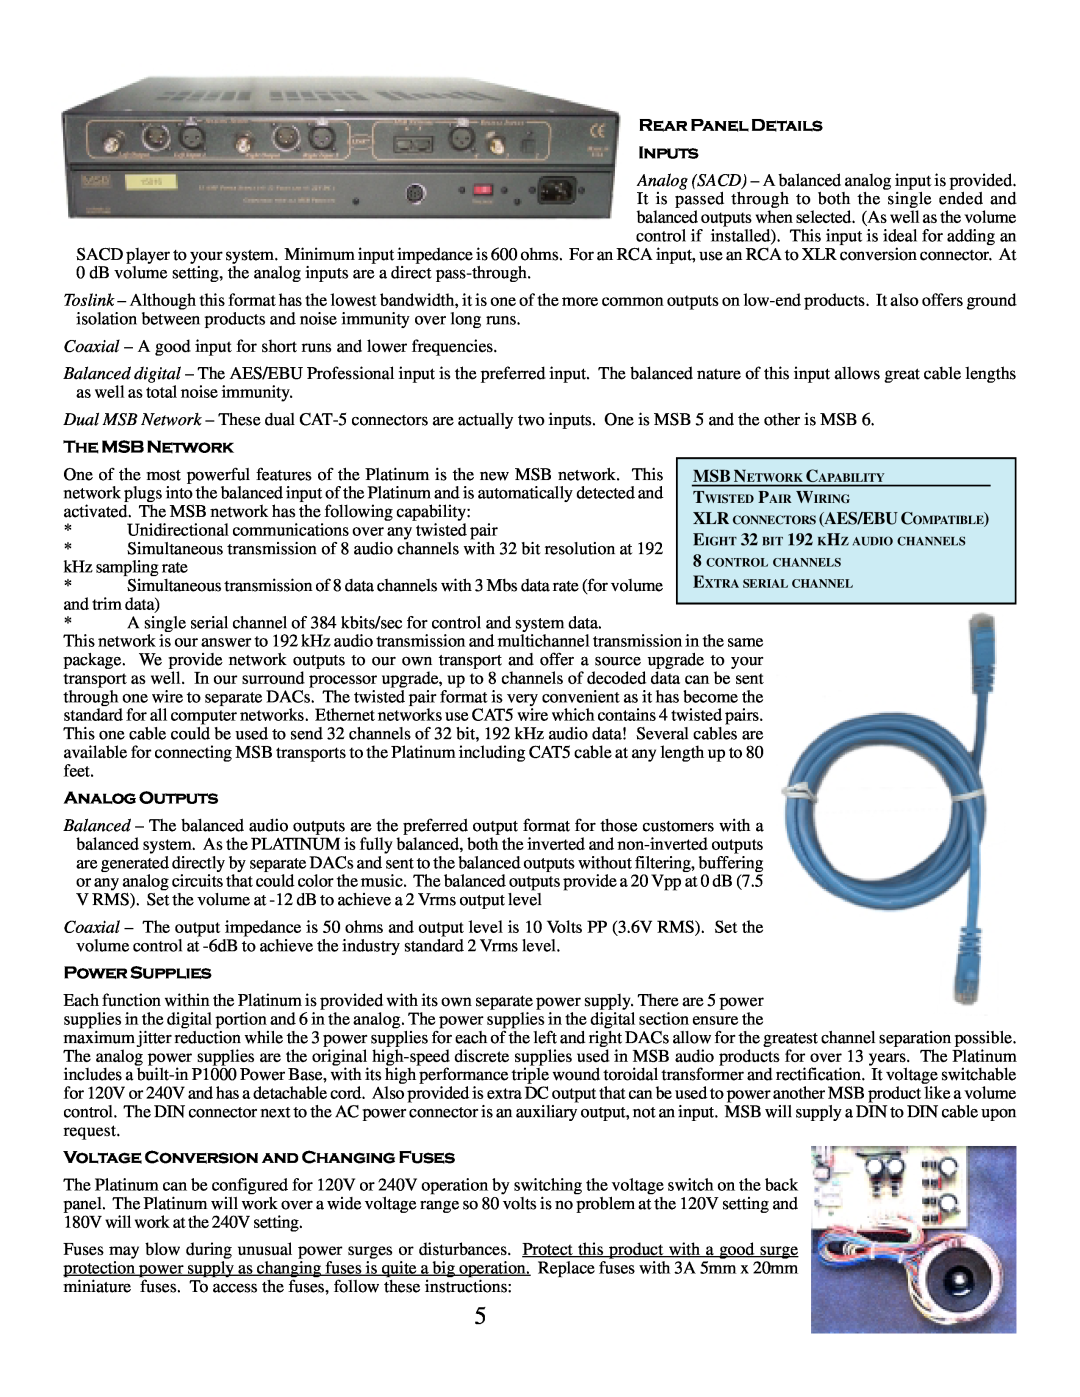 MSB Technology DAC II user manual TheMSBNetwork, kHz sampling rate 